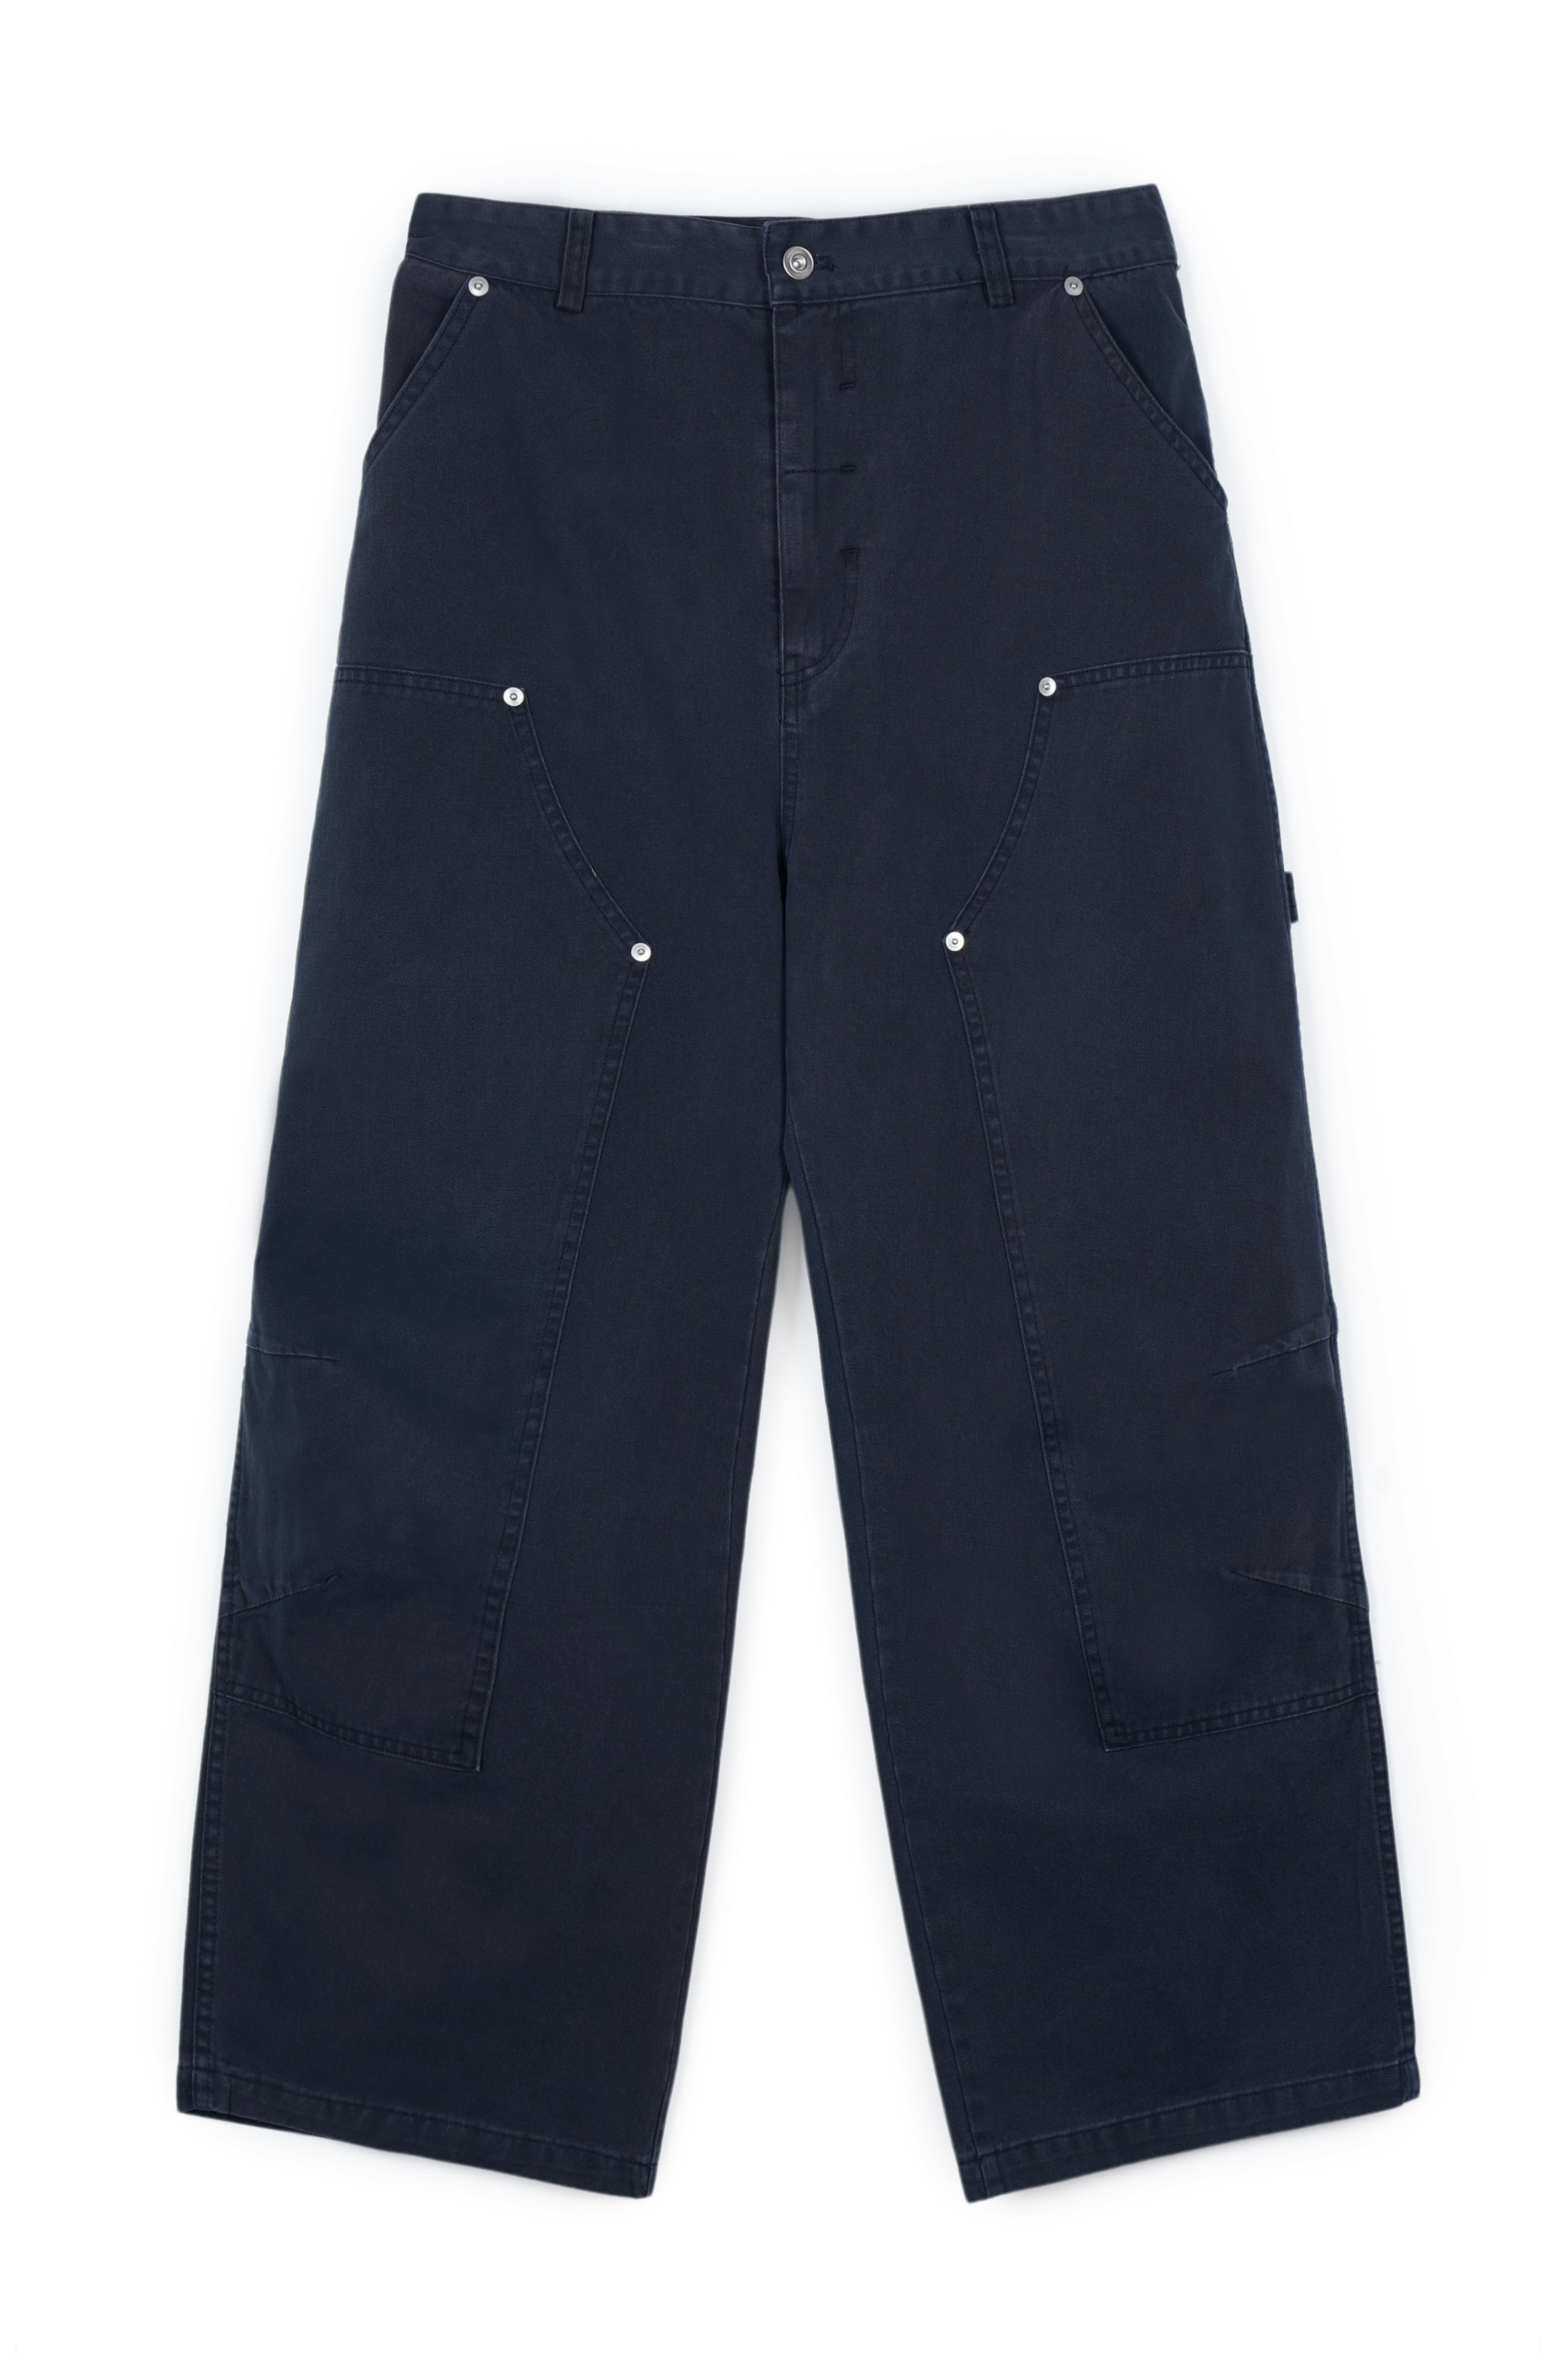 Vintage labor pants/Navy